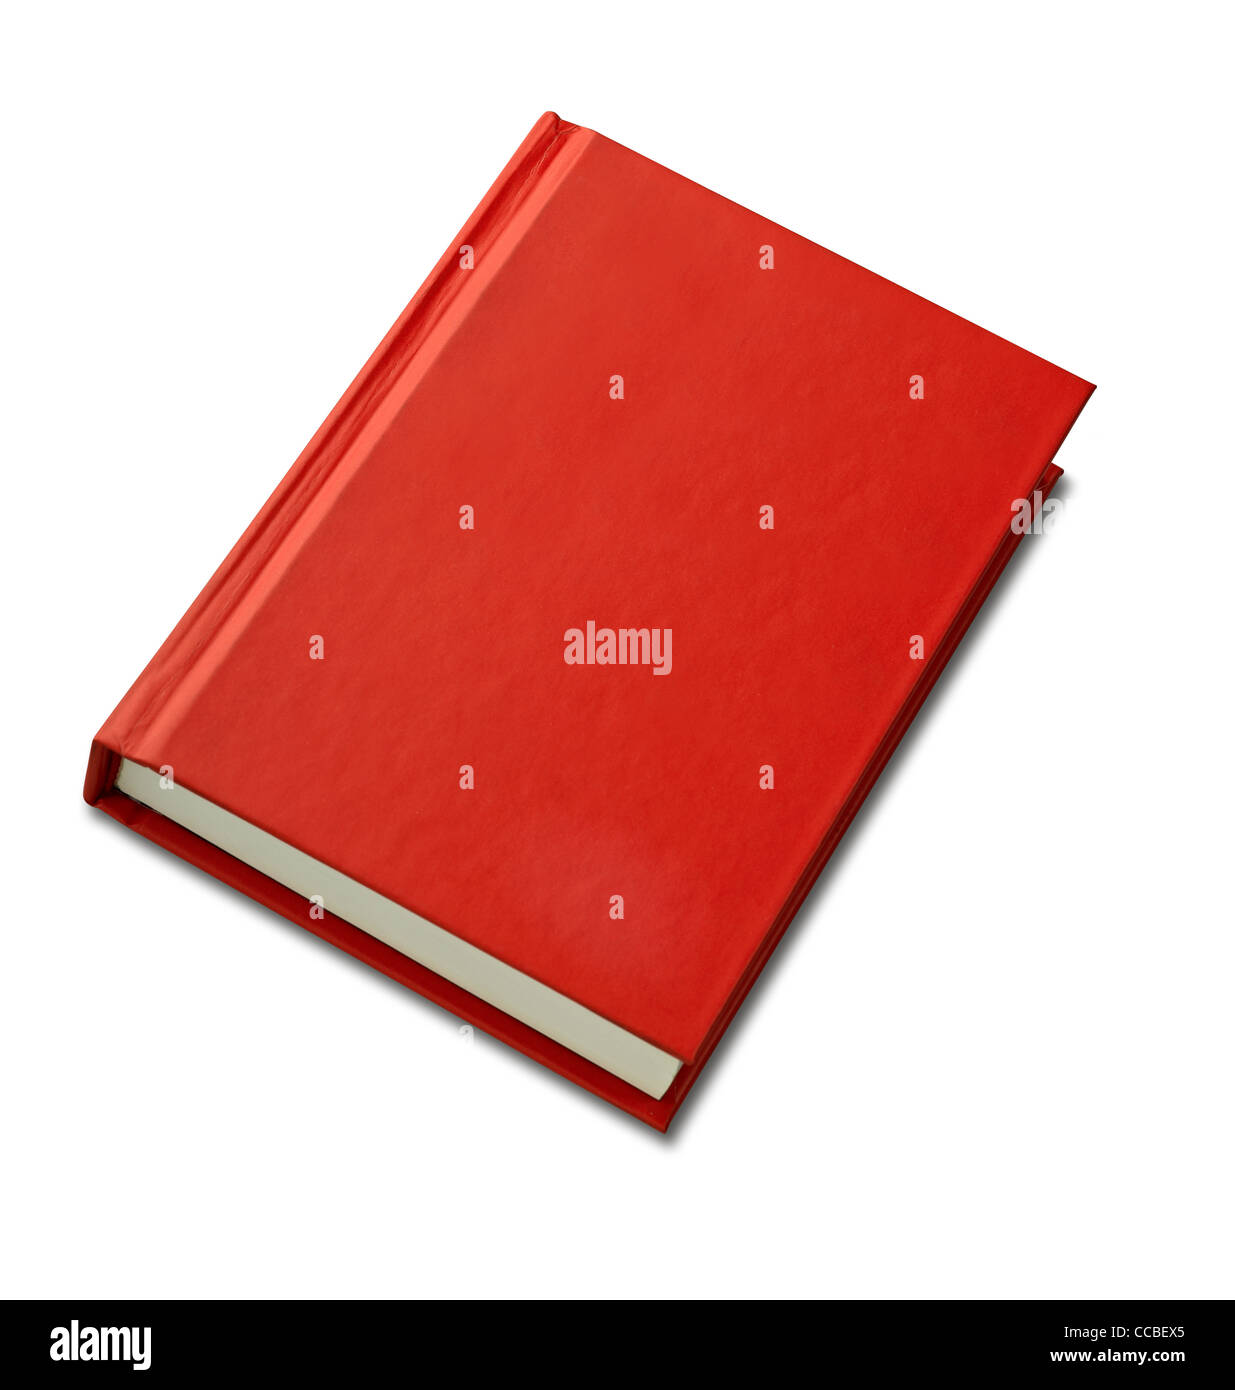 Cubierta de libro de tapa dura roja en blanco listo para texto o gráfico aislado en blanco Foto de stock